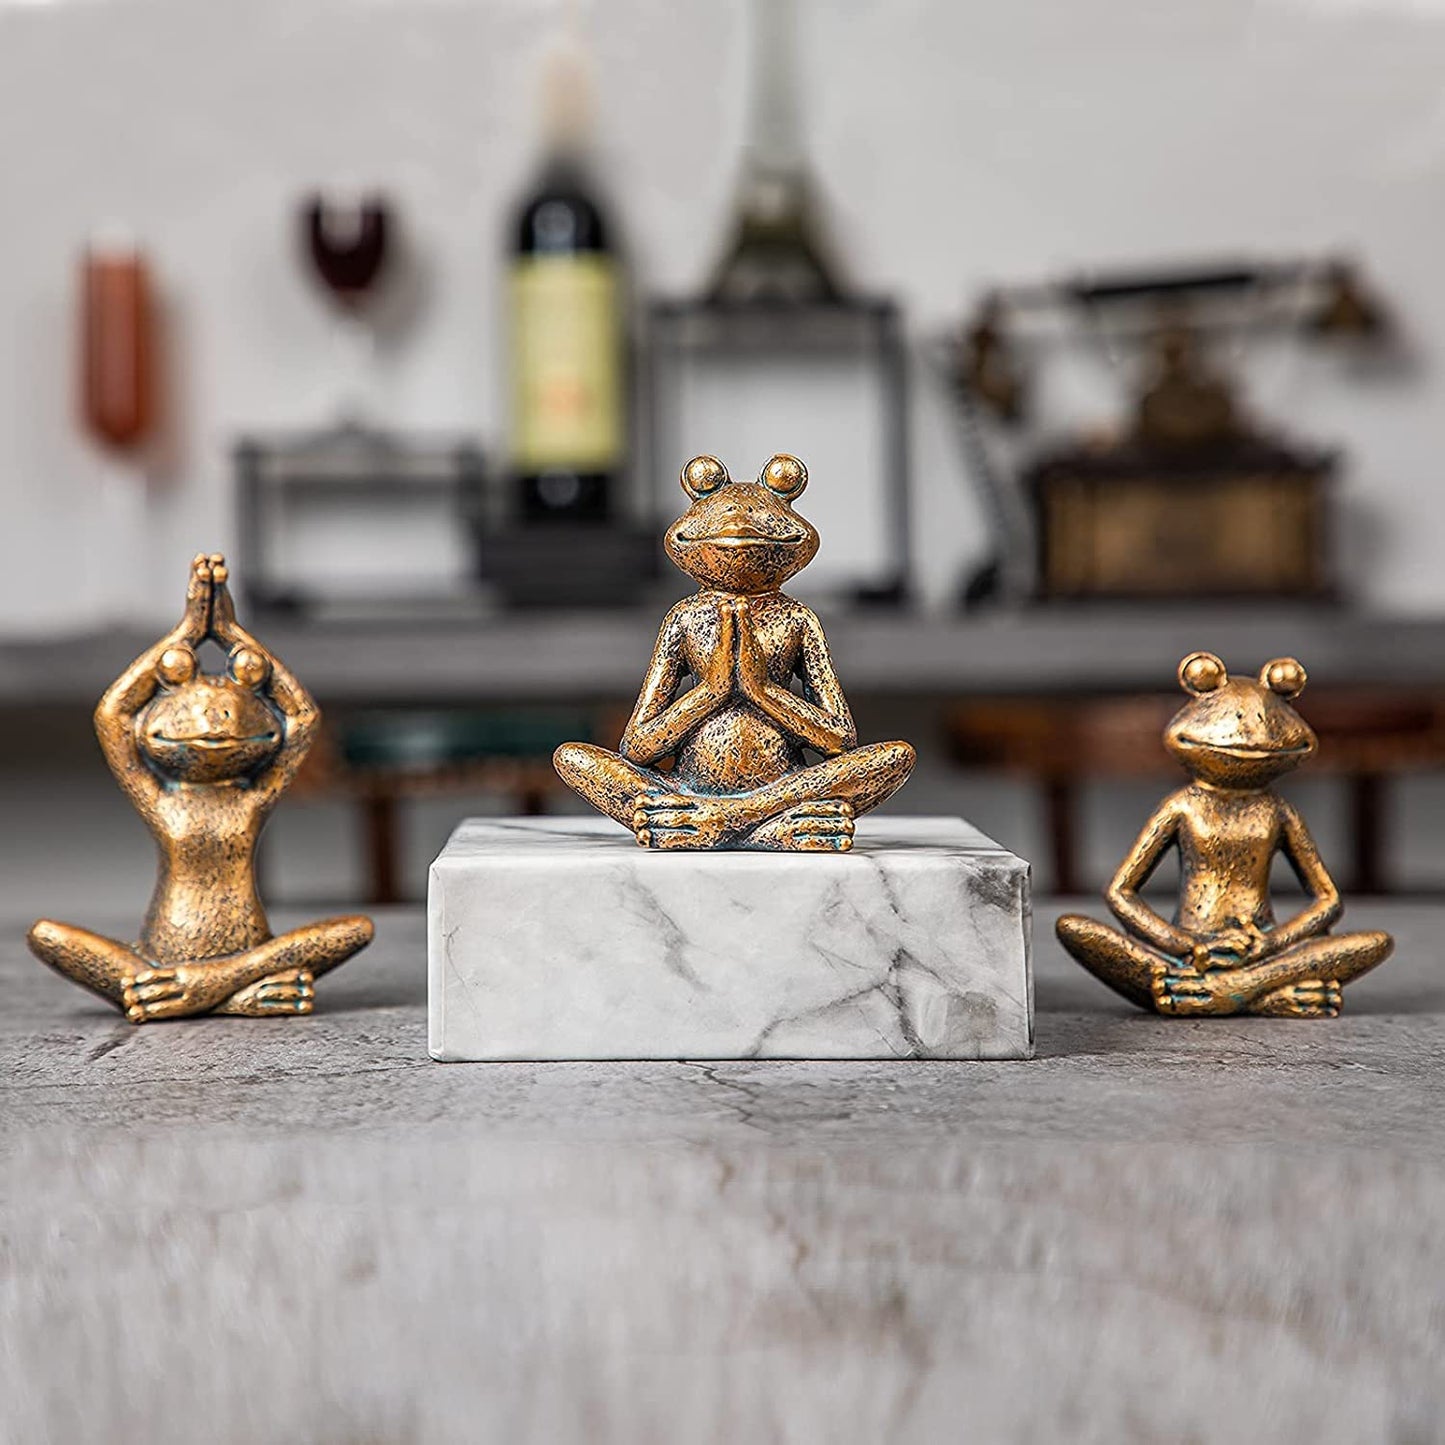 Frog figurines yoga zen decor – frog yoga statues for home decor,set of 3 yoga statues and sculptures meditation decor for shelves,zen decor yoga statue shelf decor accent antique bronze color